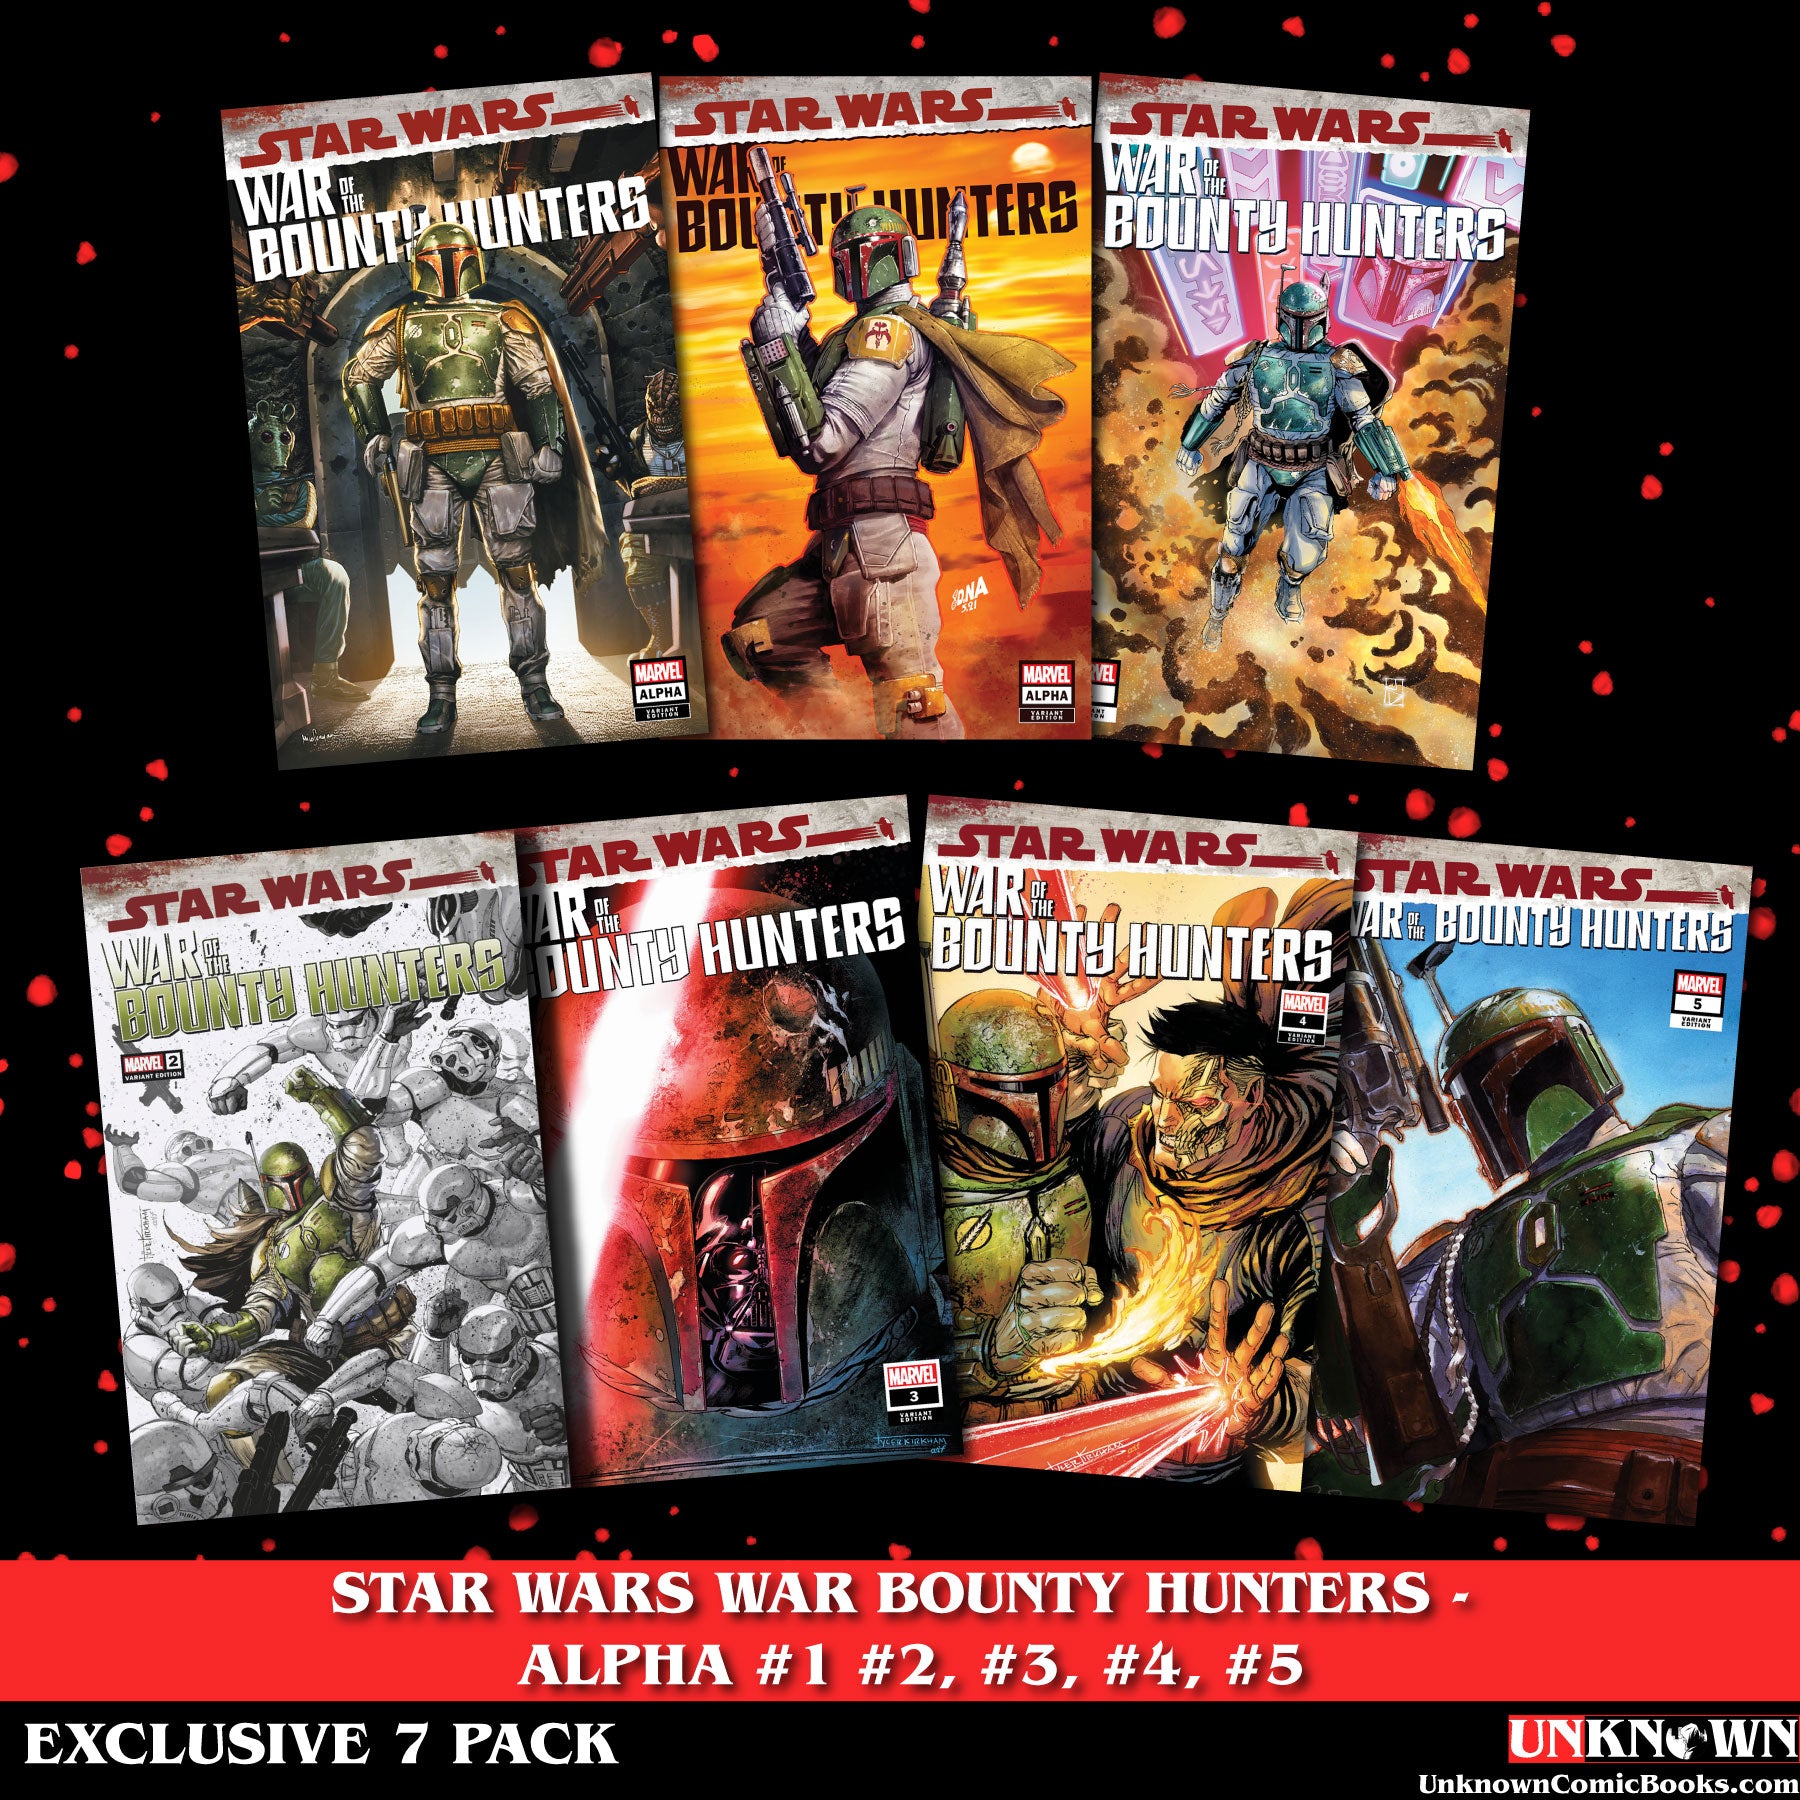 [7 PACK] STAR WARS WAR BOUNTY HUNTERS (2 ALPHA COVERS #1-#5) ALPHA, 1, 2, 3, 4, 5 UNKNOWN COMICS EXCLUSIVE BUNDLE VAR (04/27/2022)